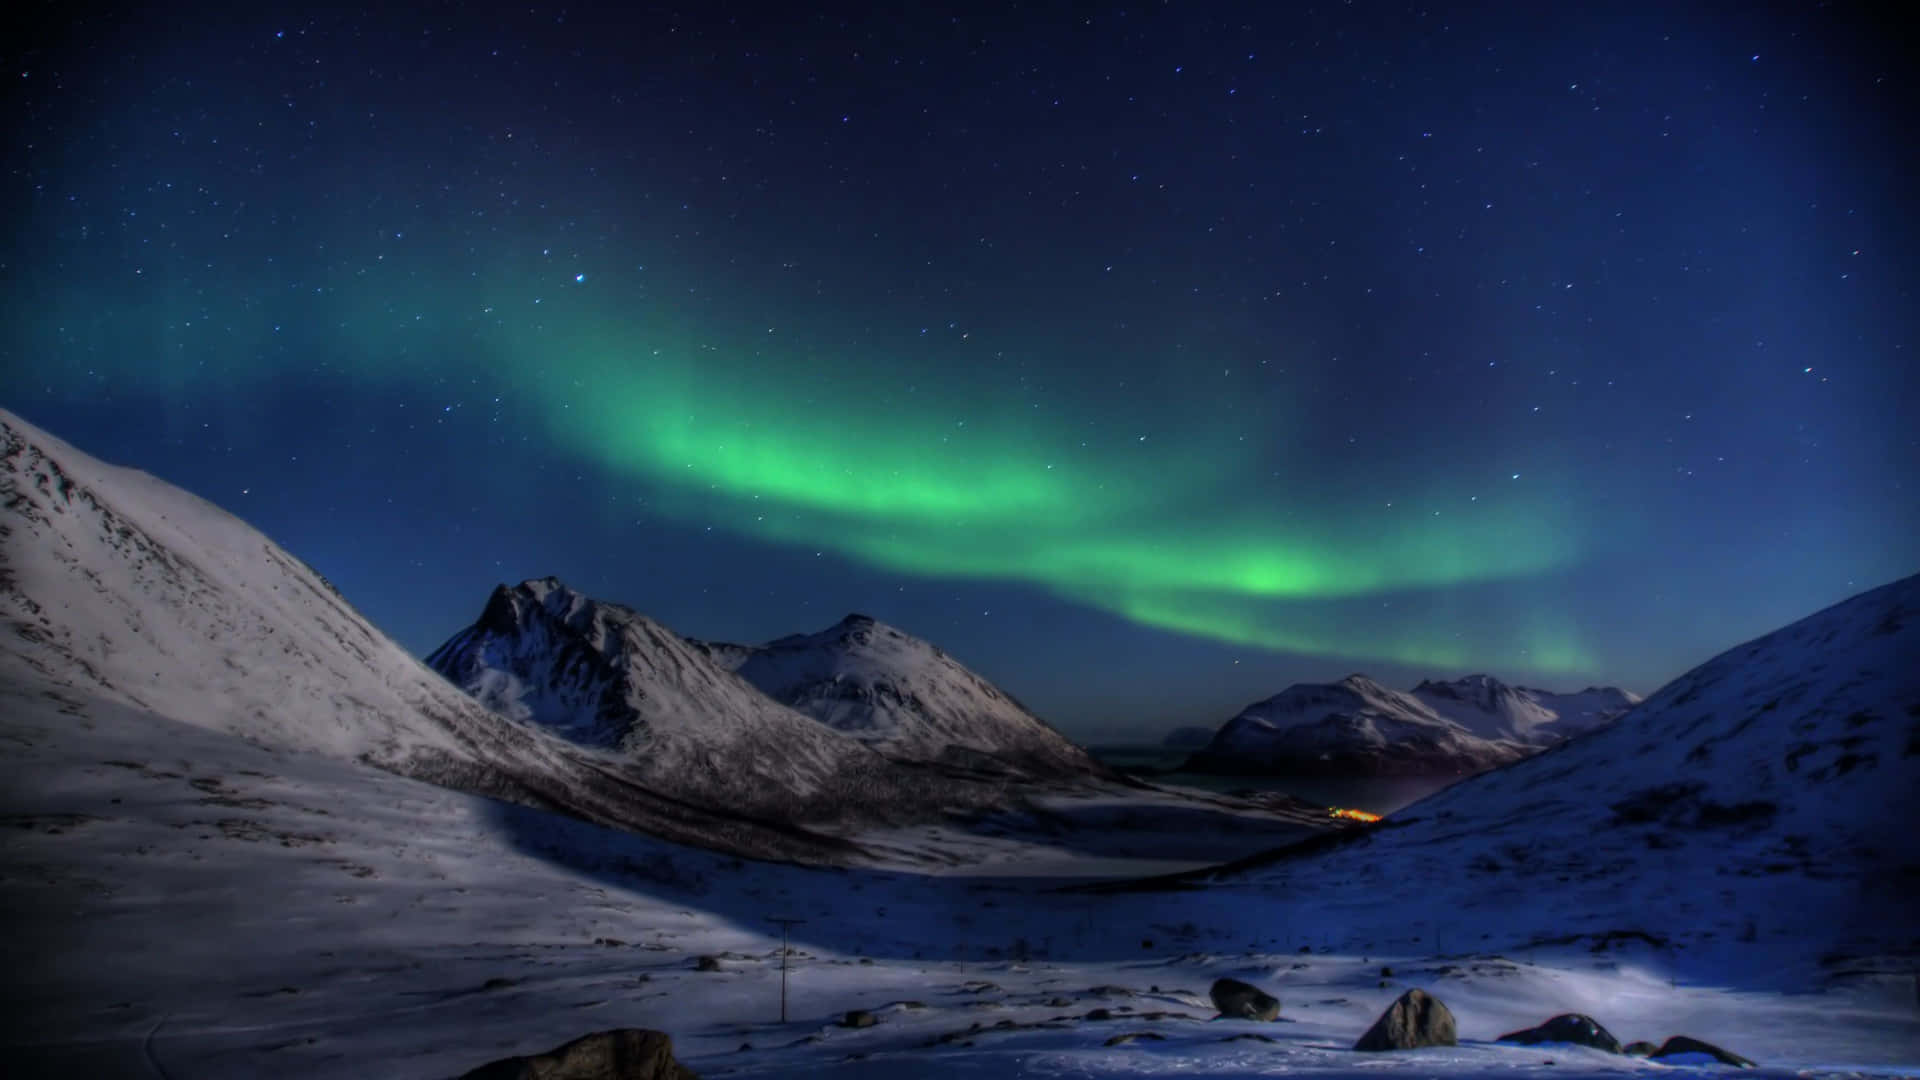 Experience the beauty of the Aurora Borealis